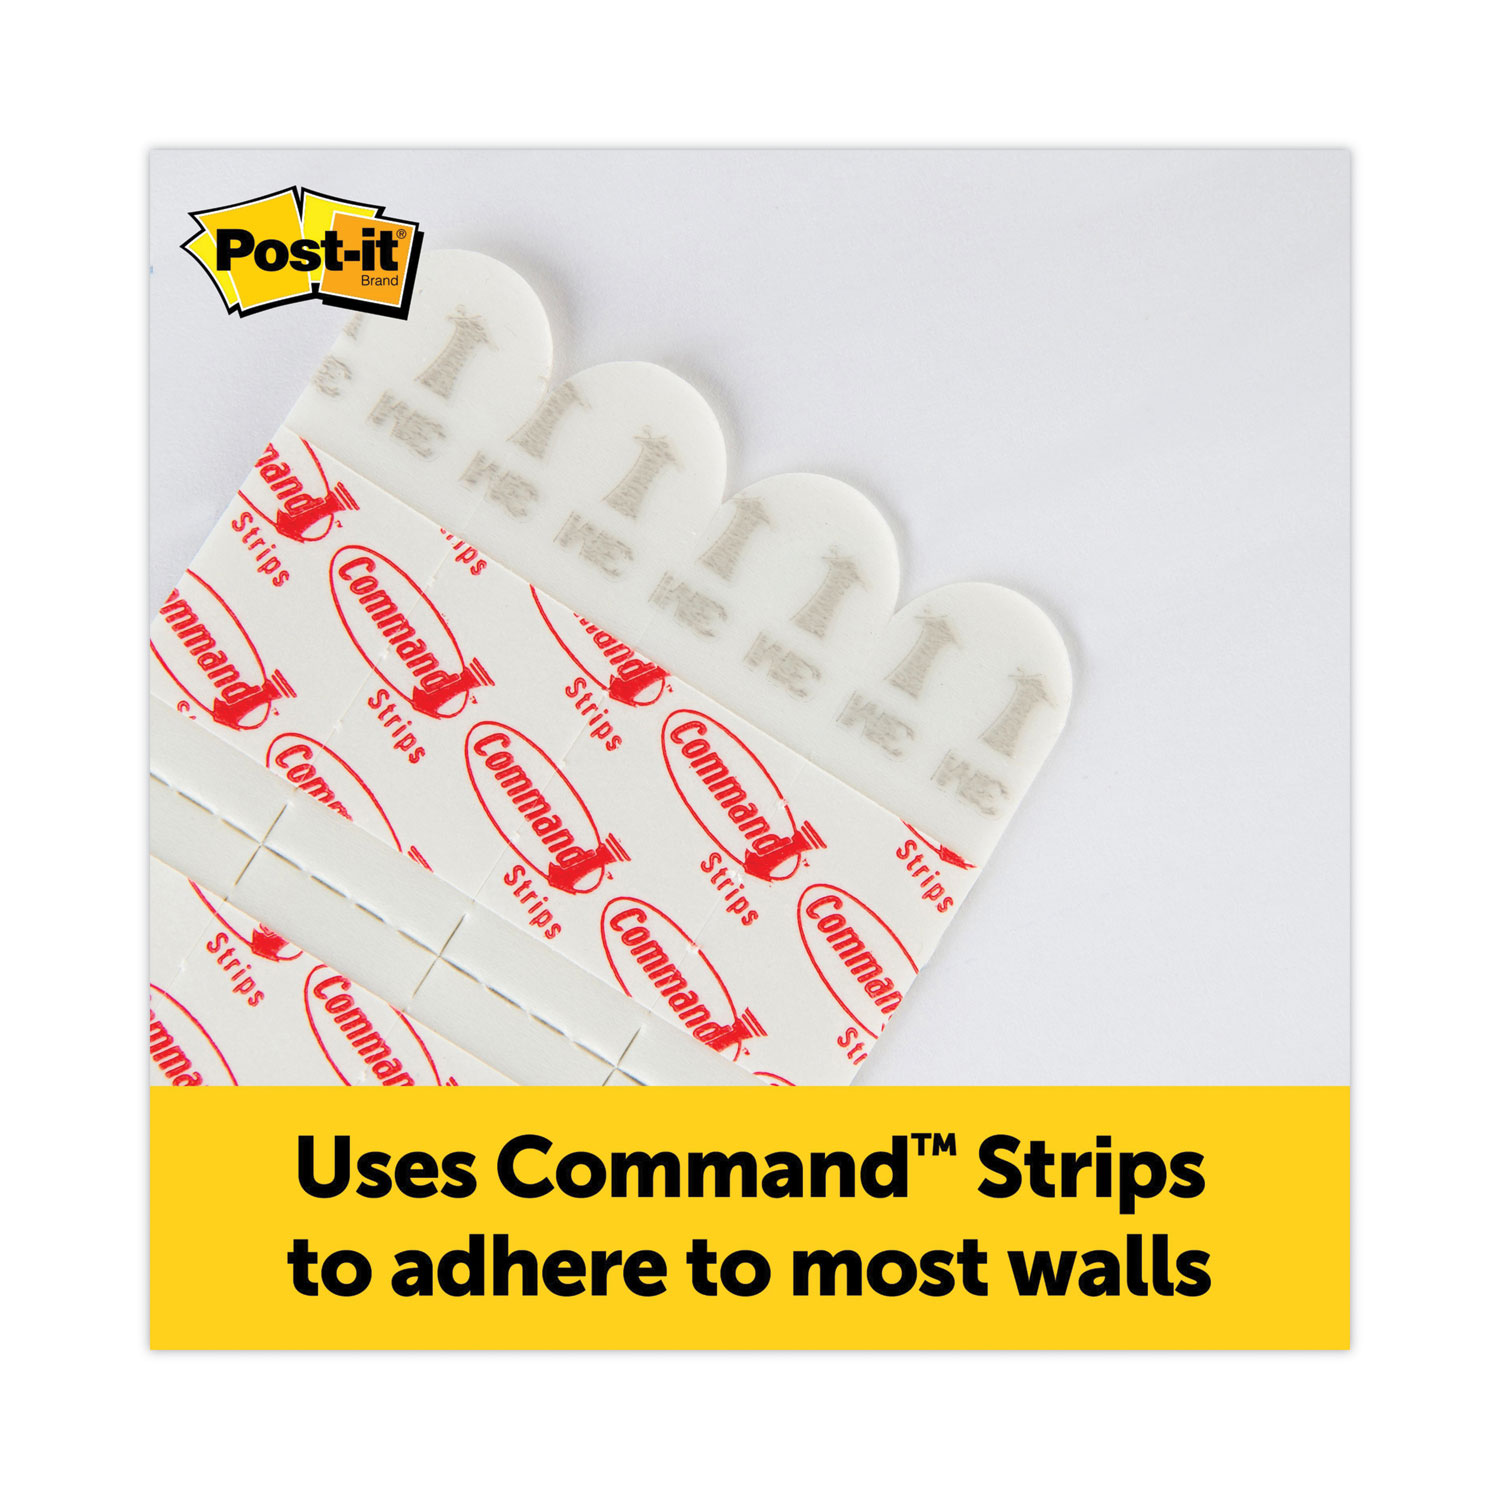 Post-it Wall Pad Easel Pad w/ Bonus Command Strips, 20 x 23, 2 Pads 